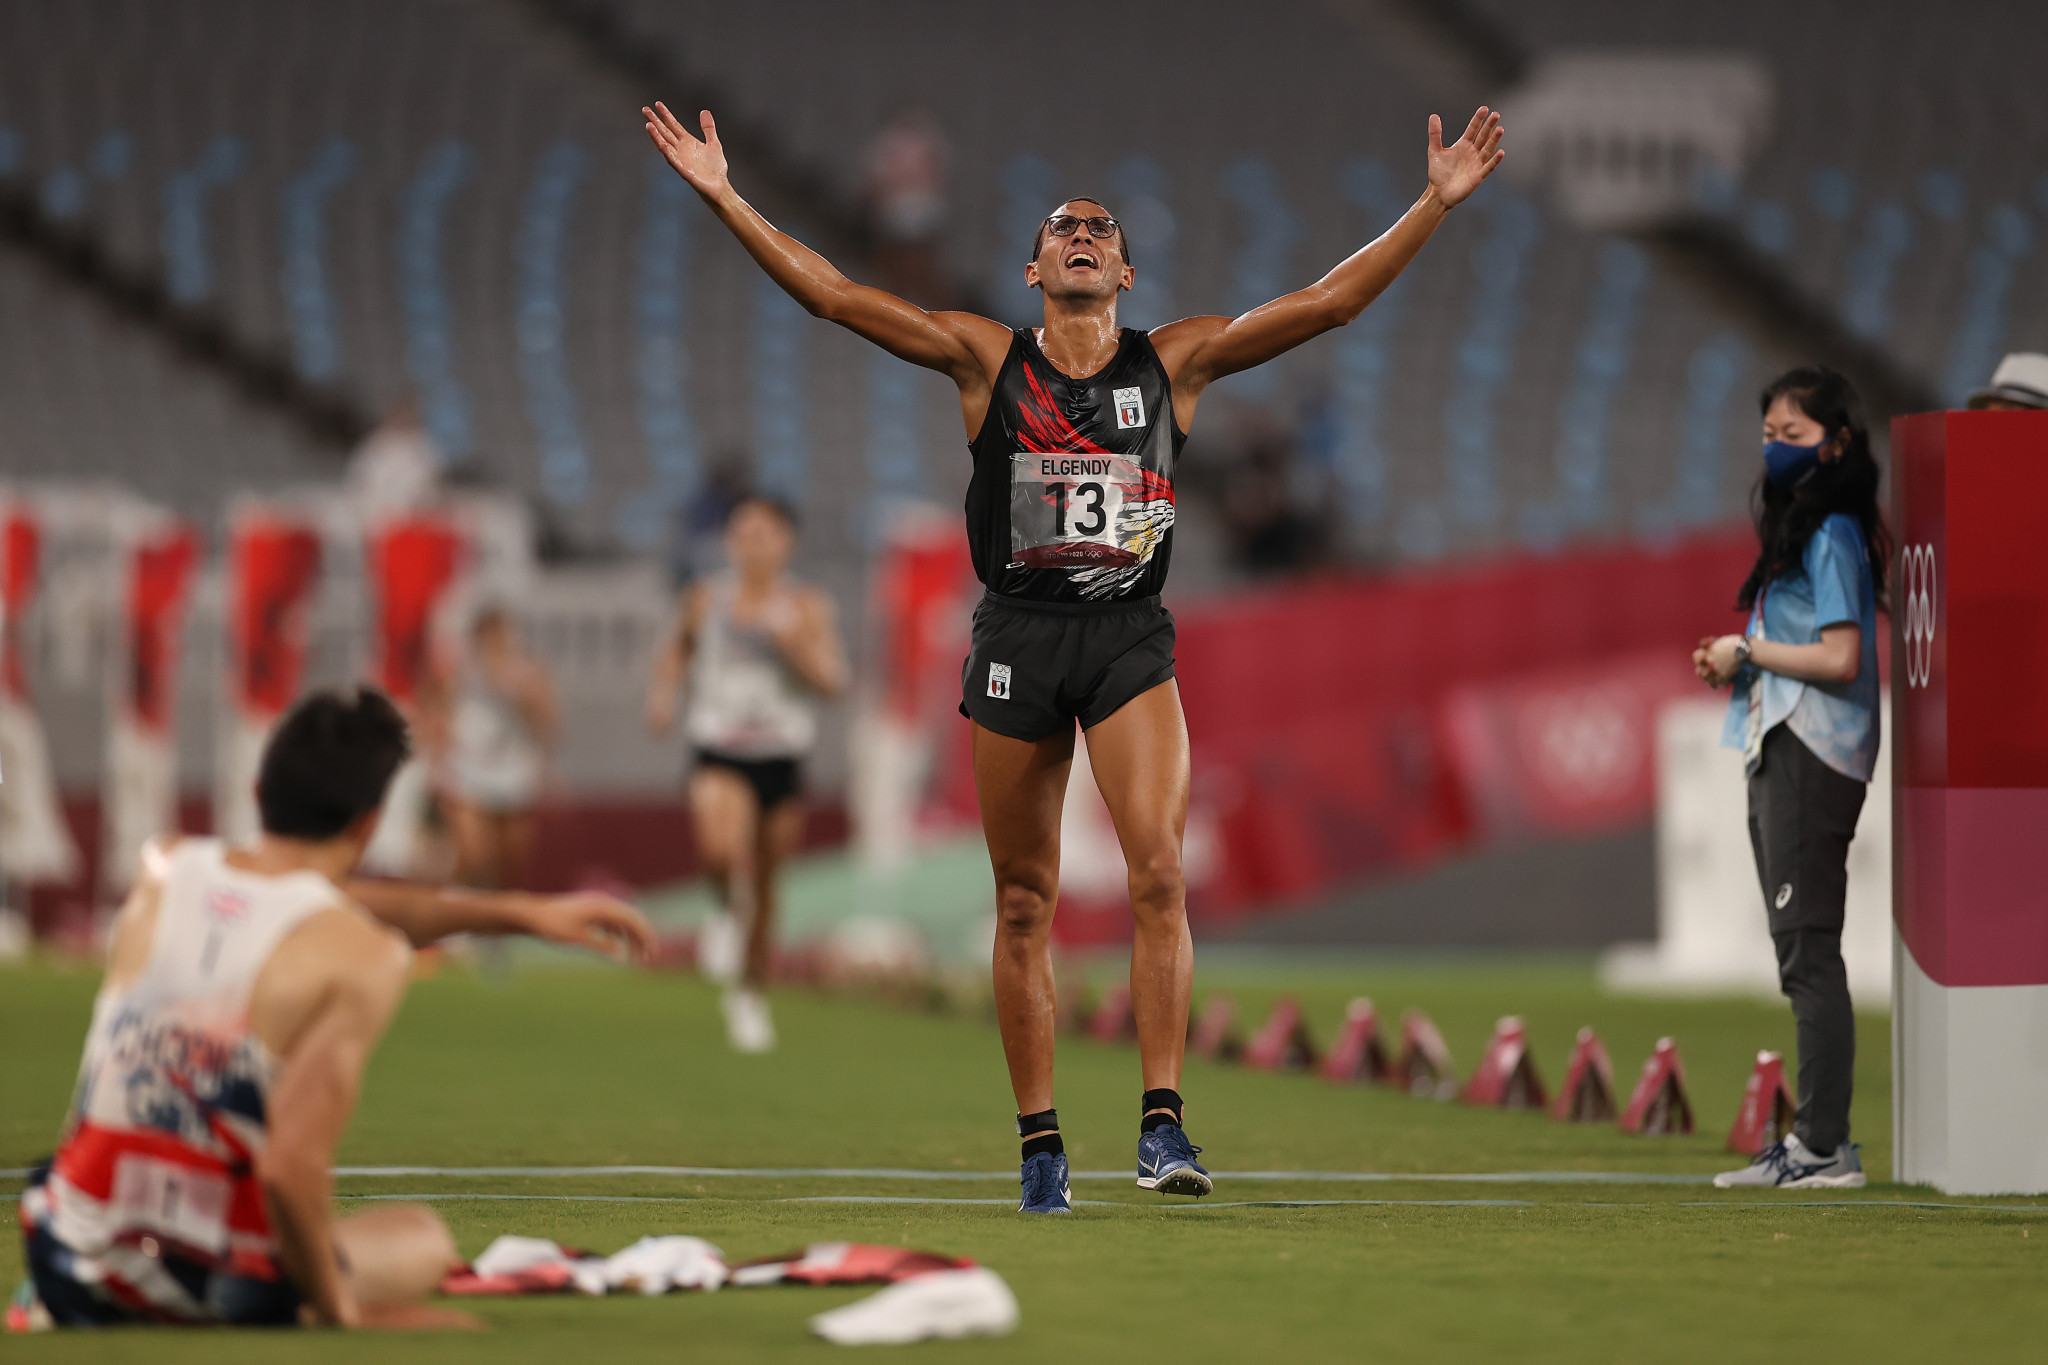 Egypt and Australia earn modern pentathlon quota spots for Paris 2024 after Cairo success